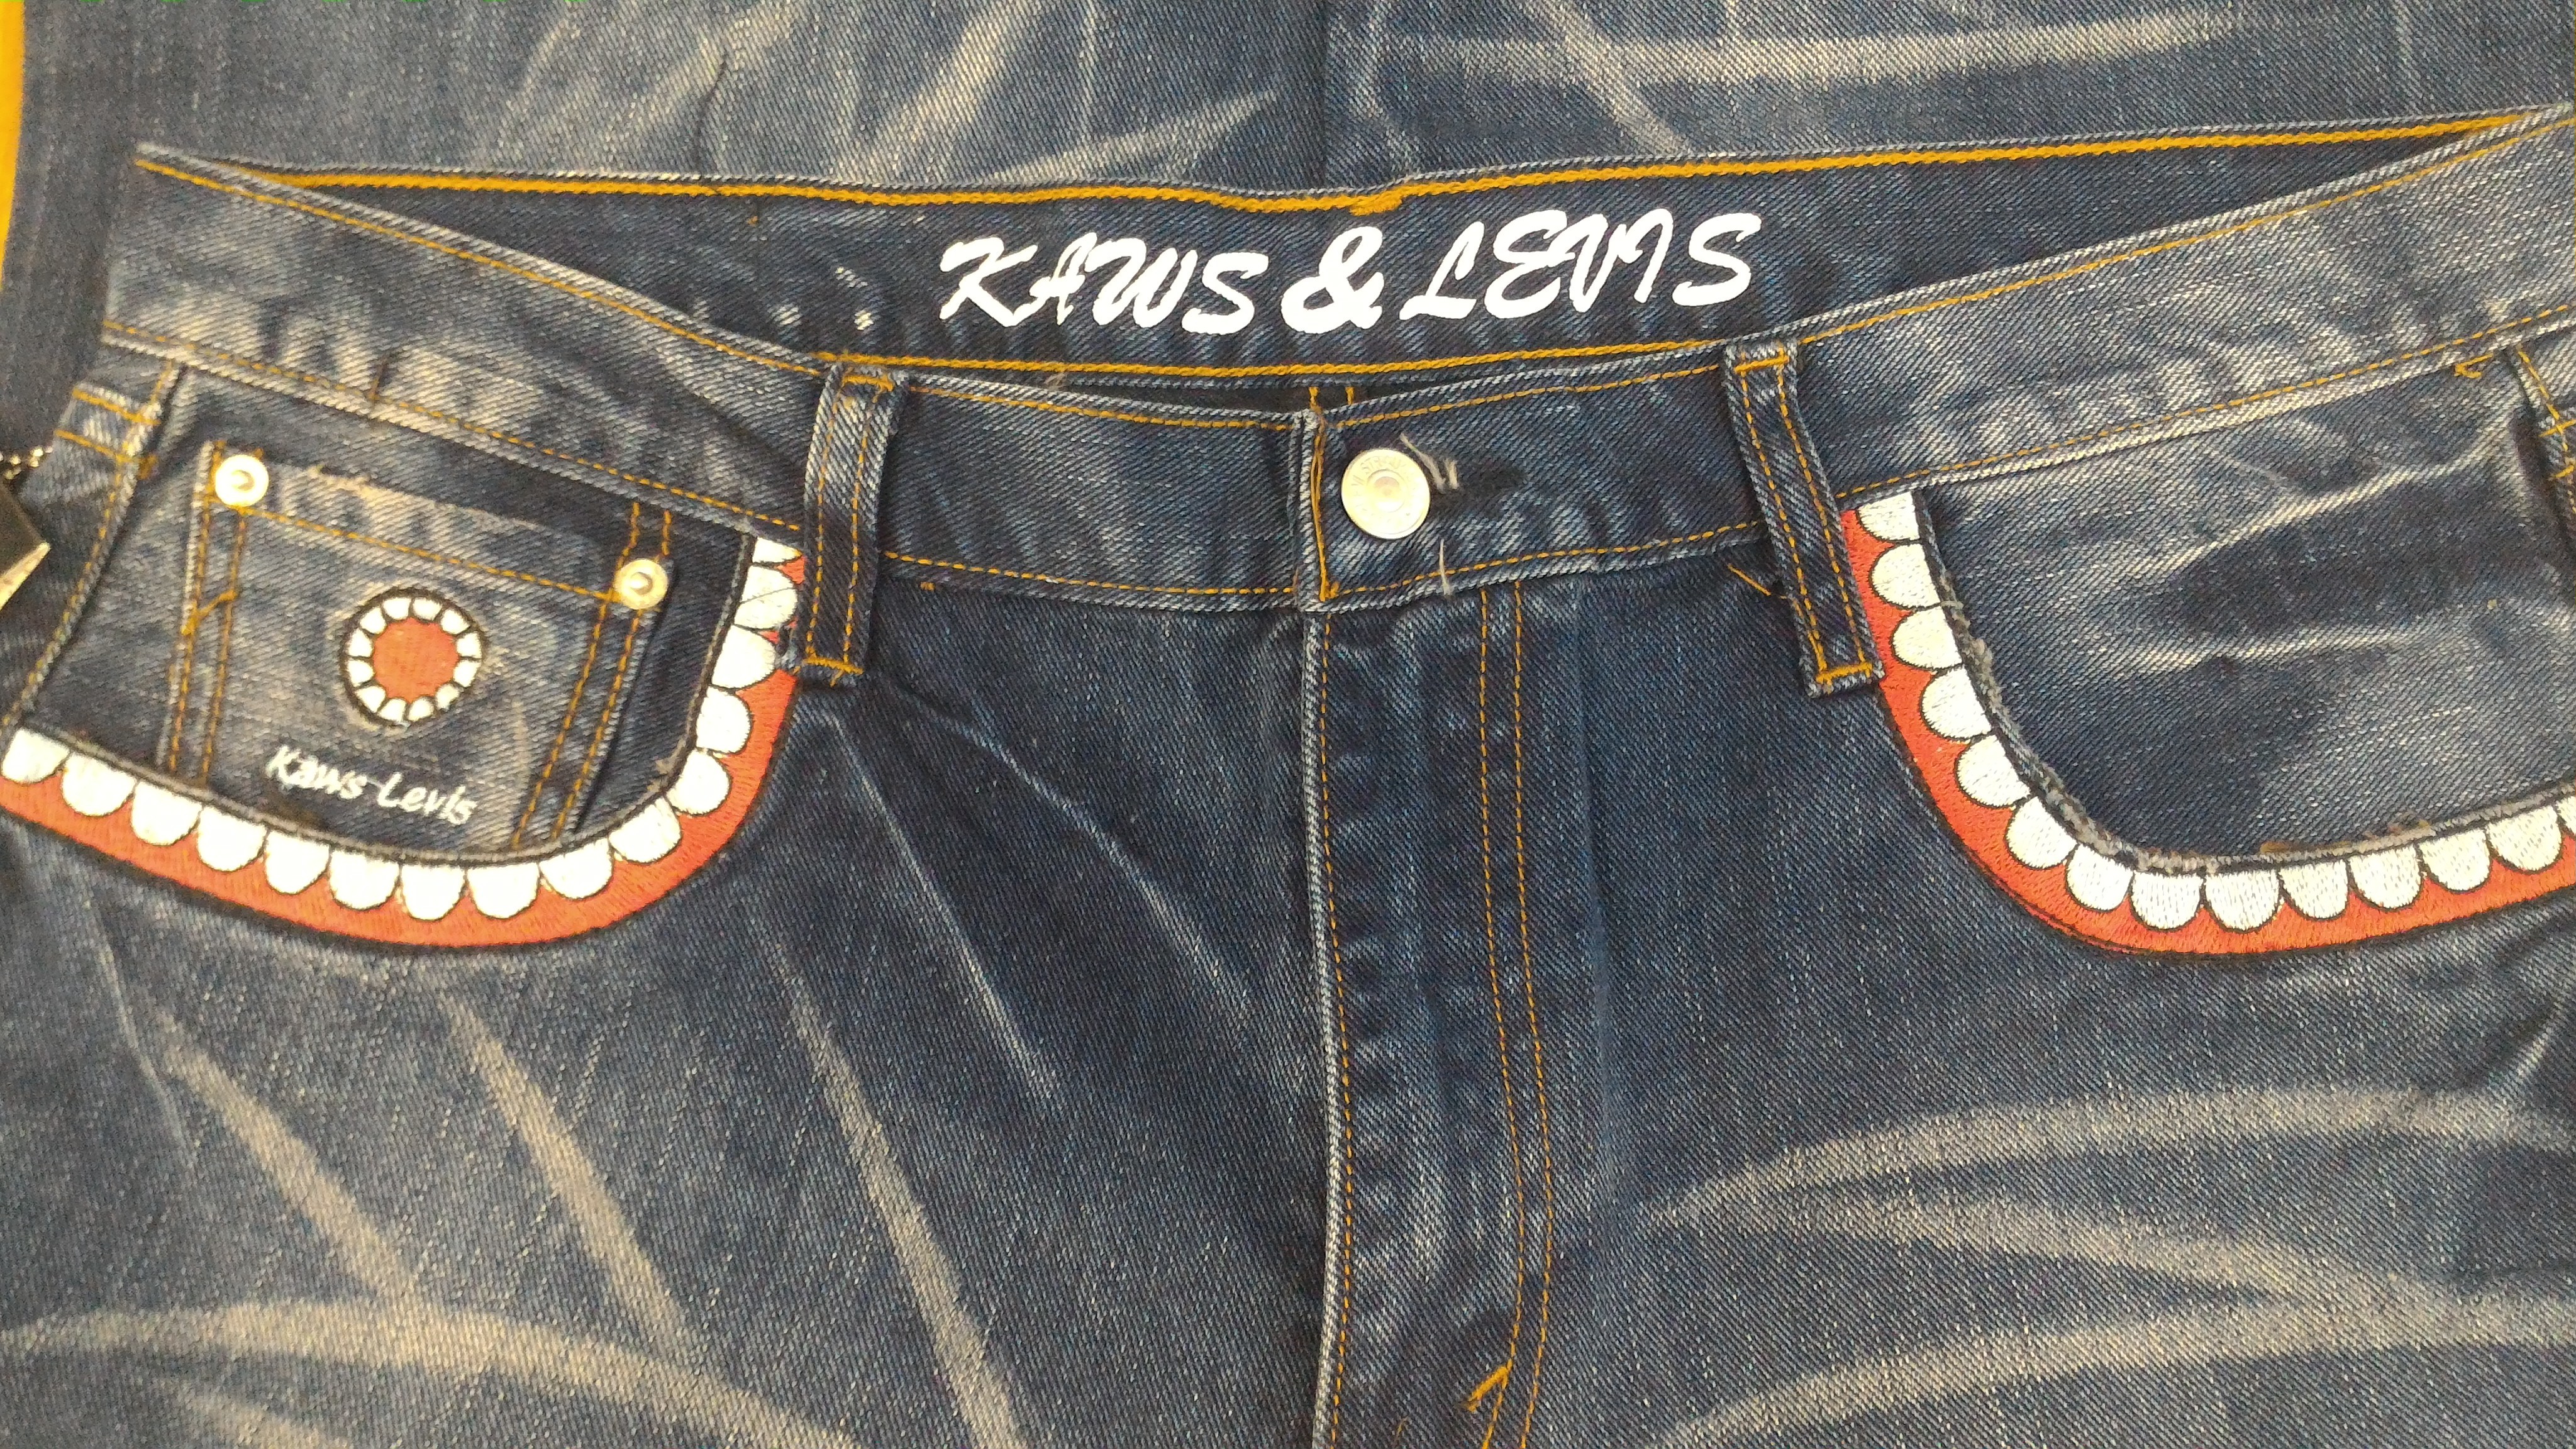 Super rare BNWT LEVIS X Kaws Original Fake jeans | Styleforum